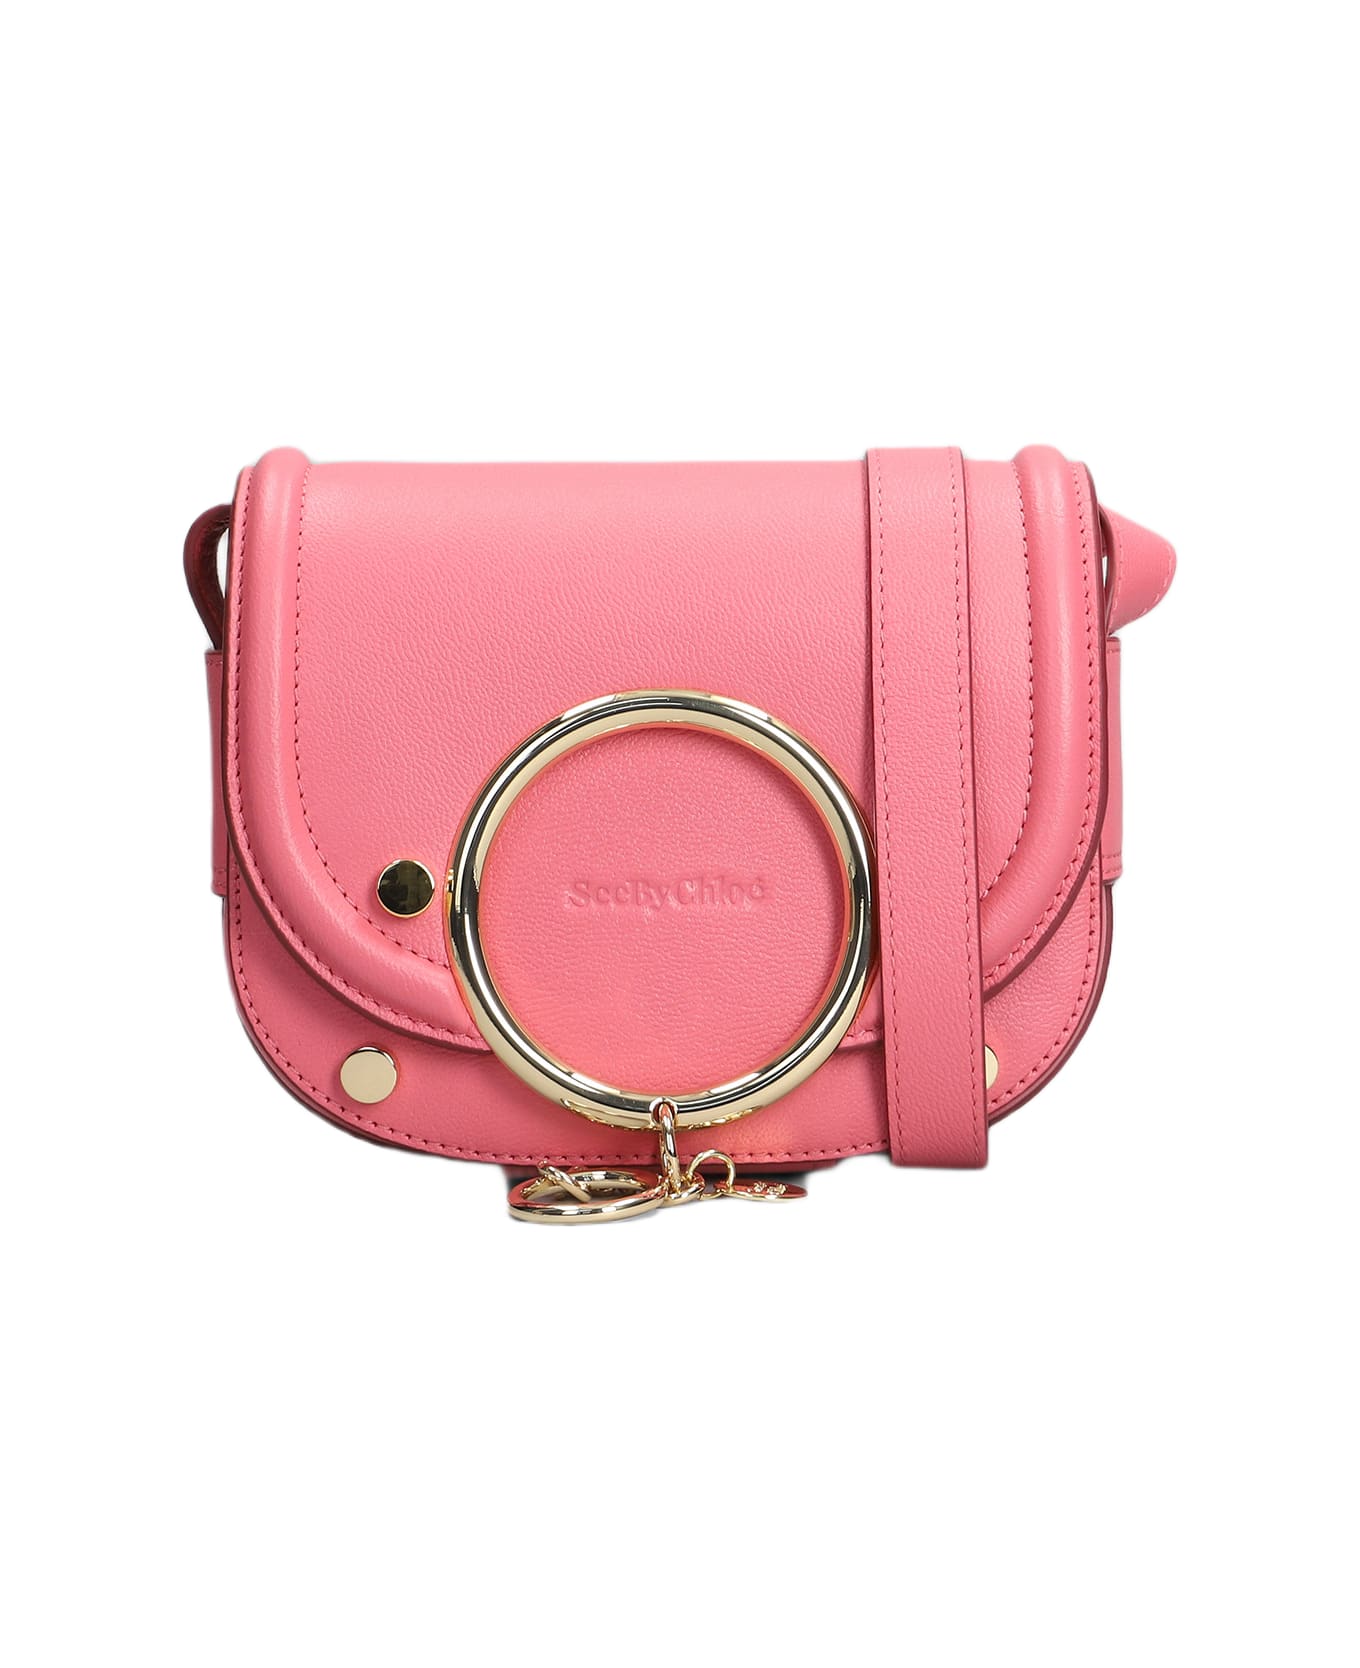 See by Chloé Mara Shoulder Bag In Rose-pink Leather - rose-pink